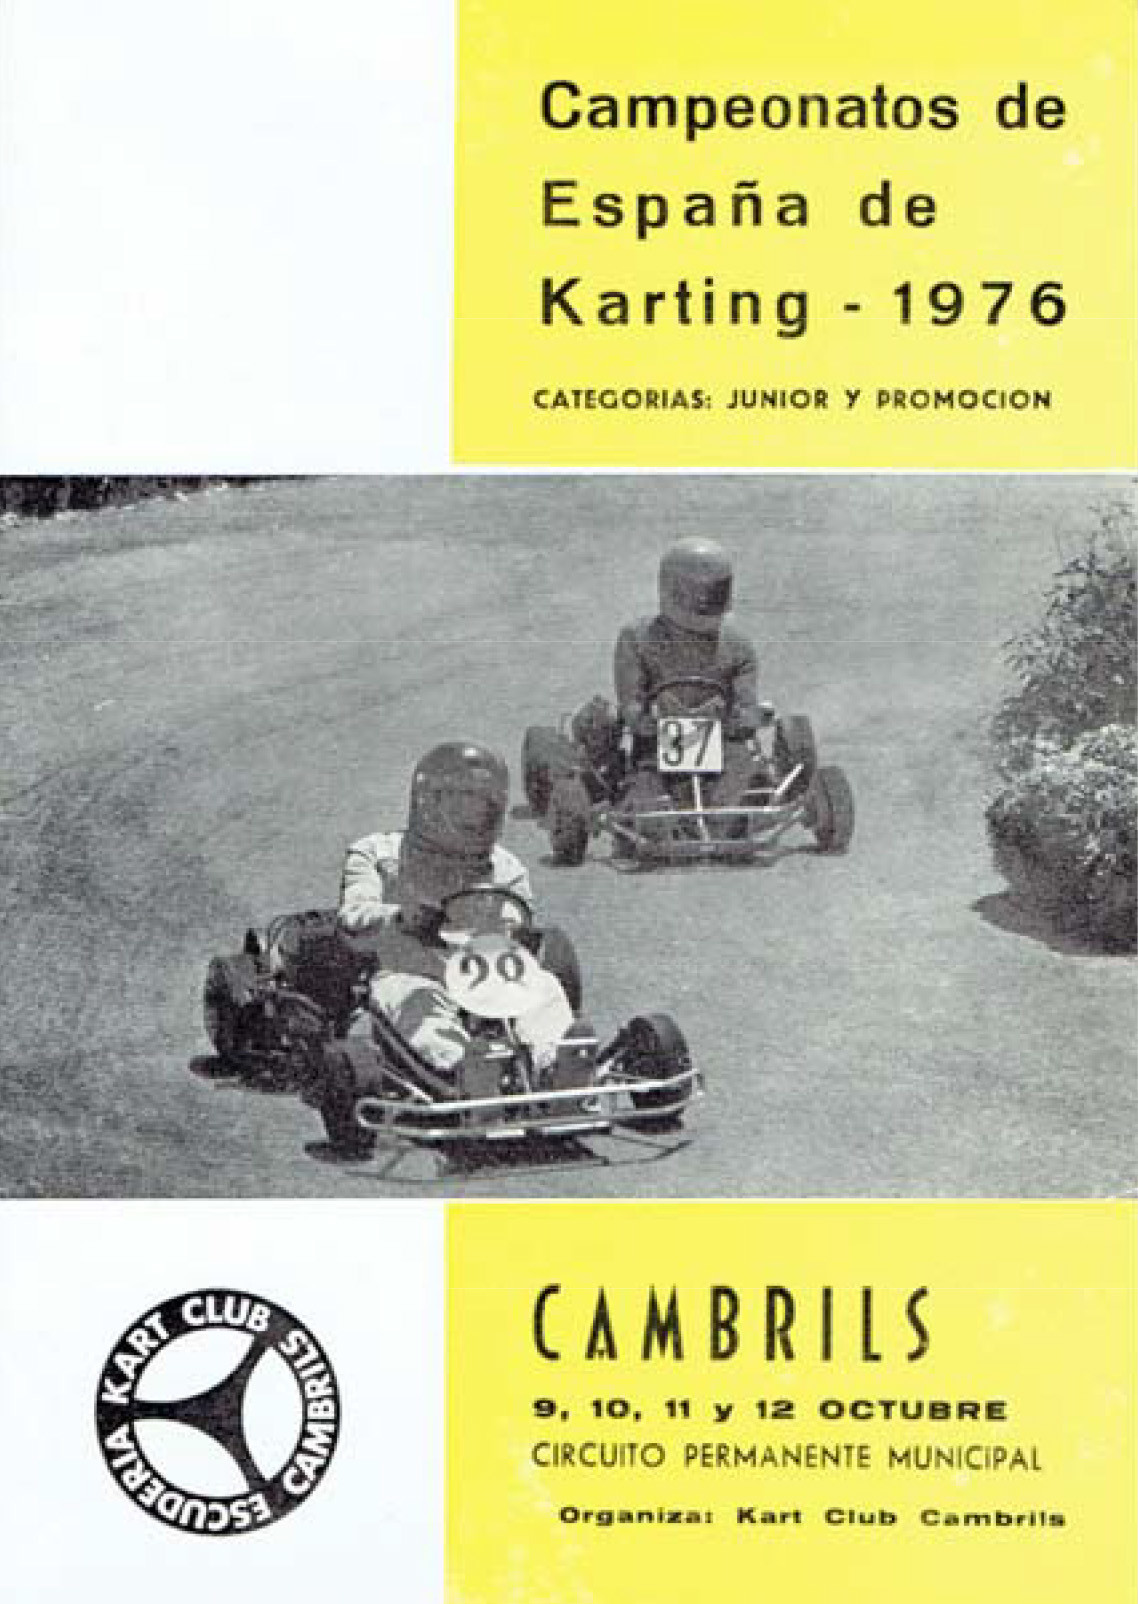 campionat karting cambrils 1976